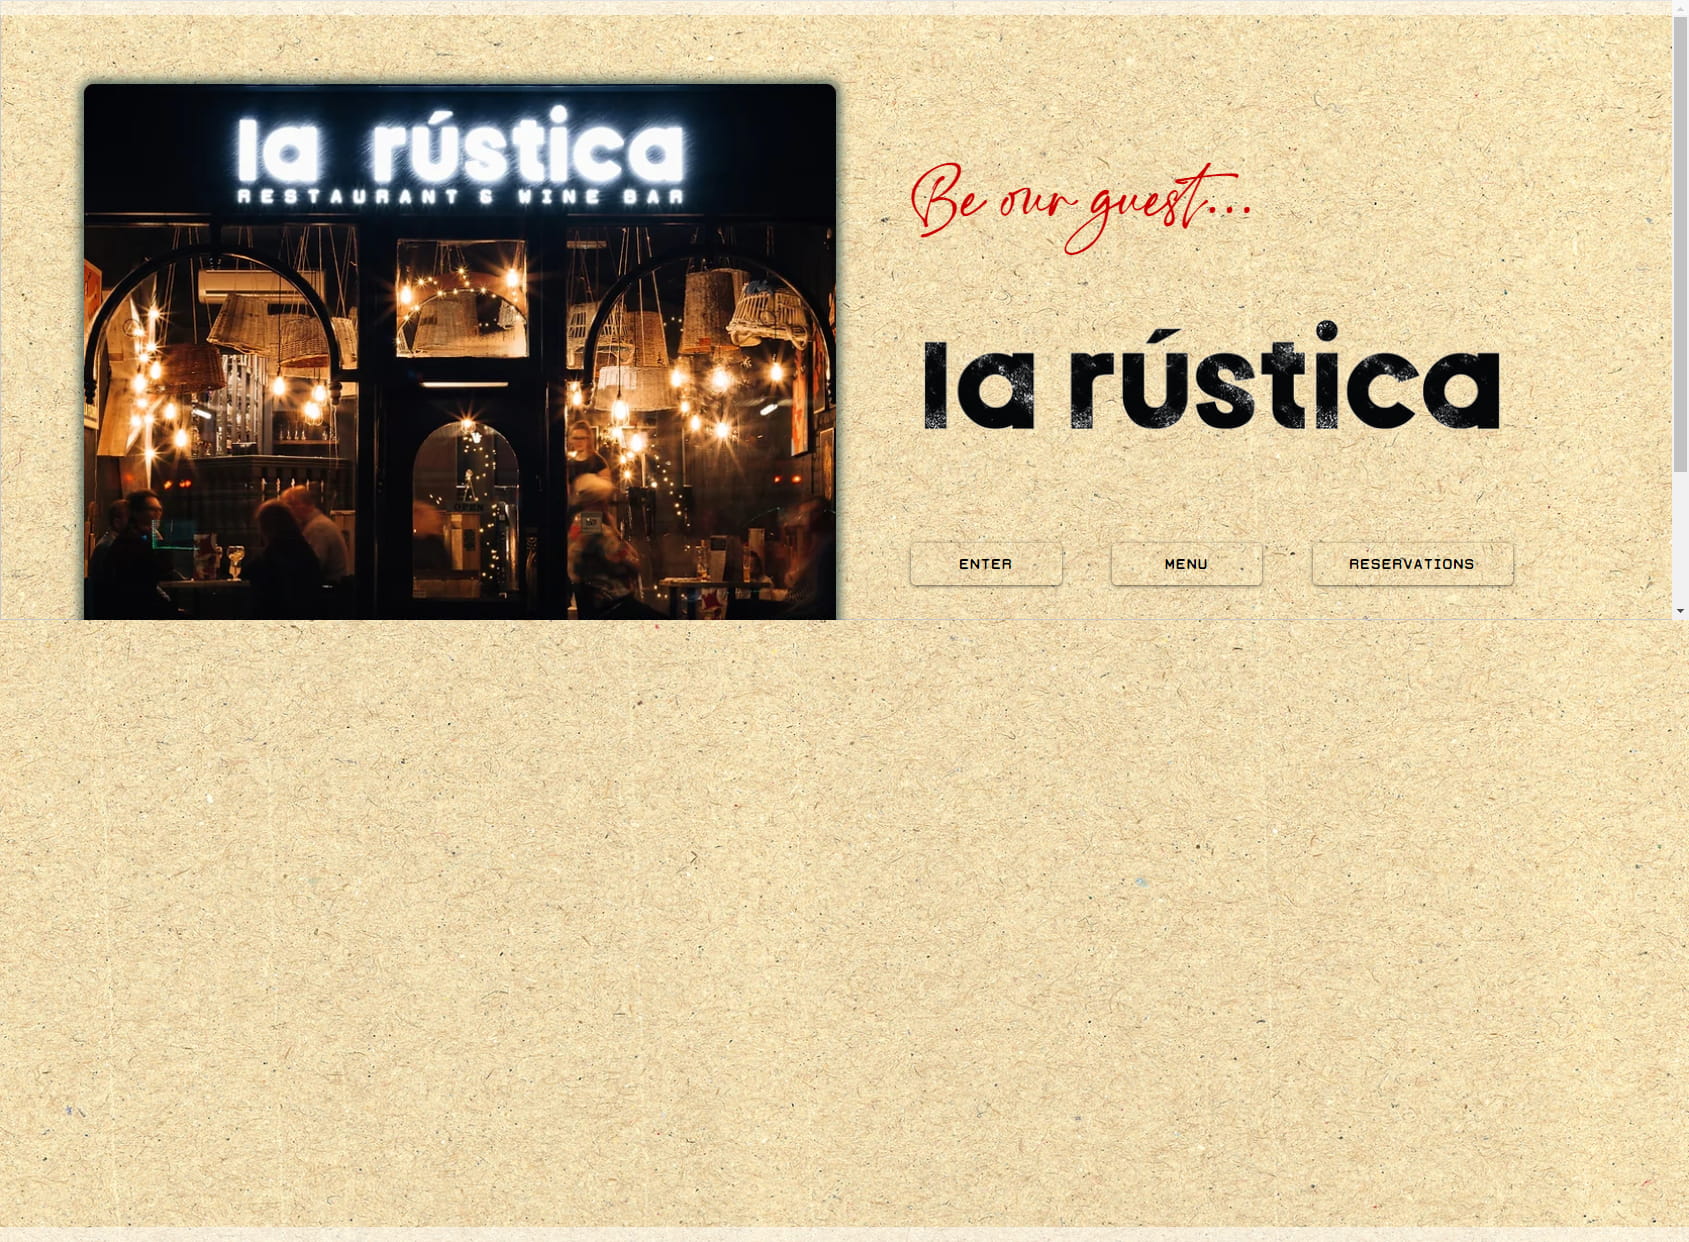 La Rustica Restaurant & Wine Bar